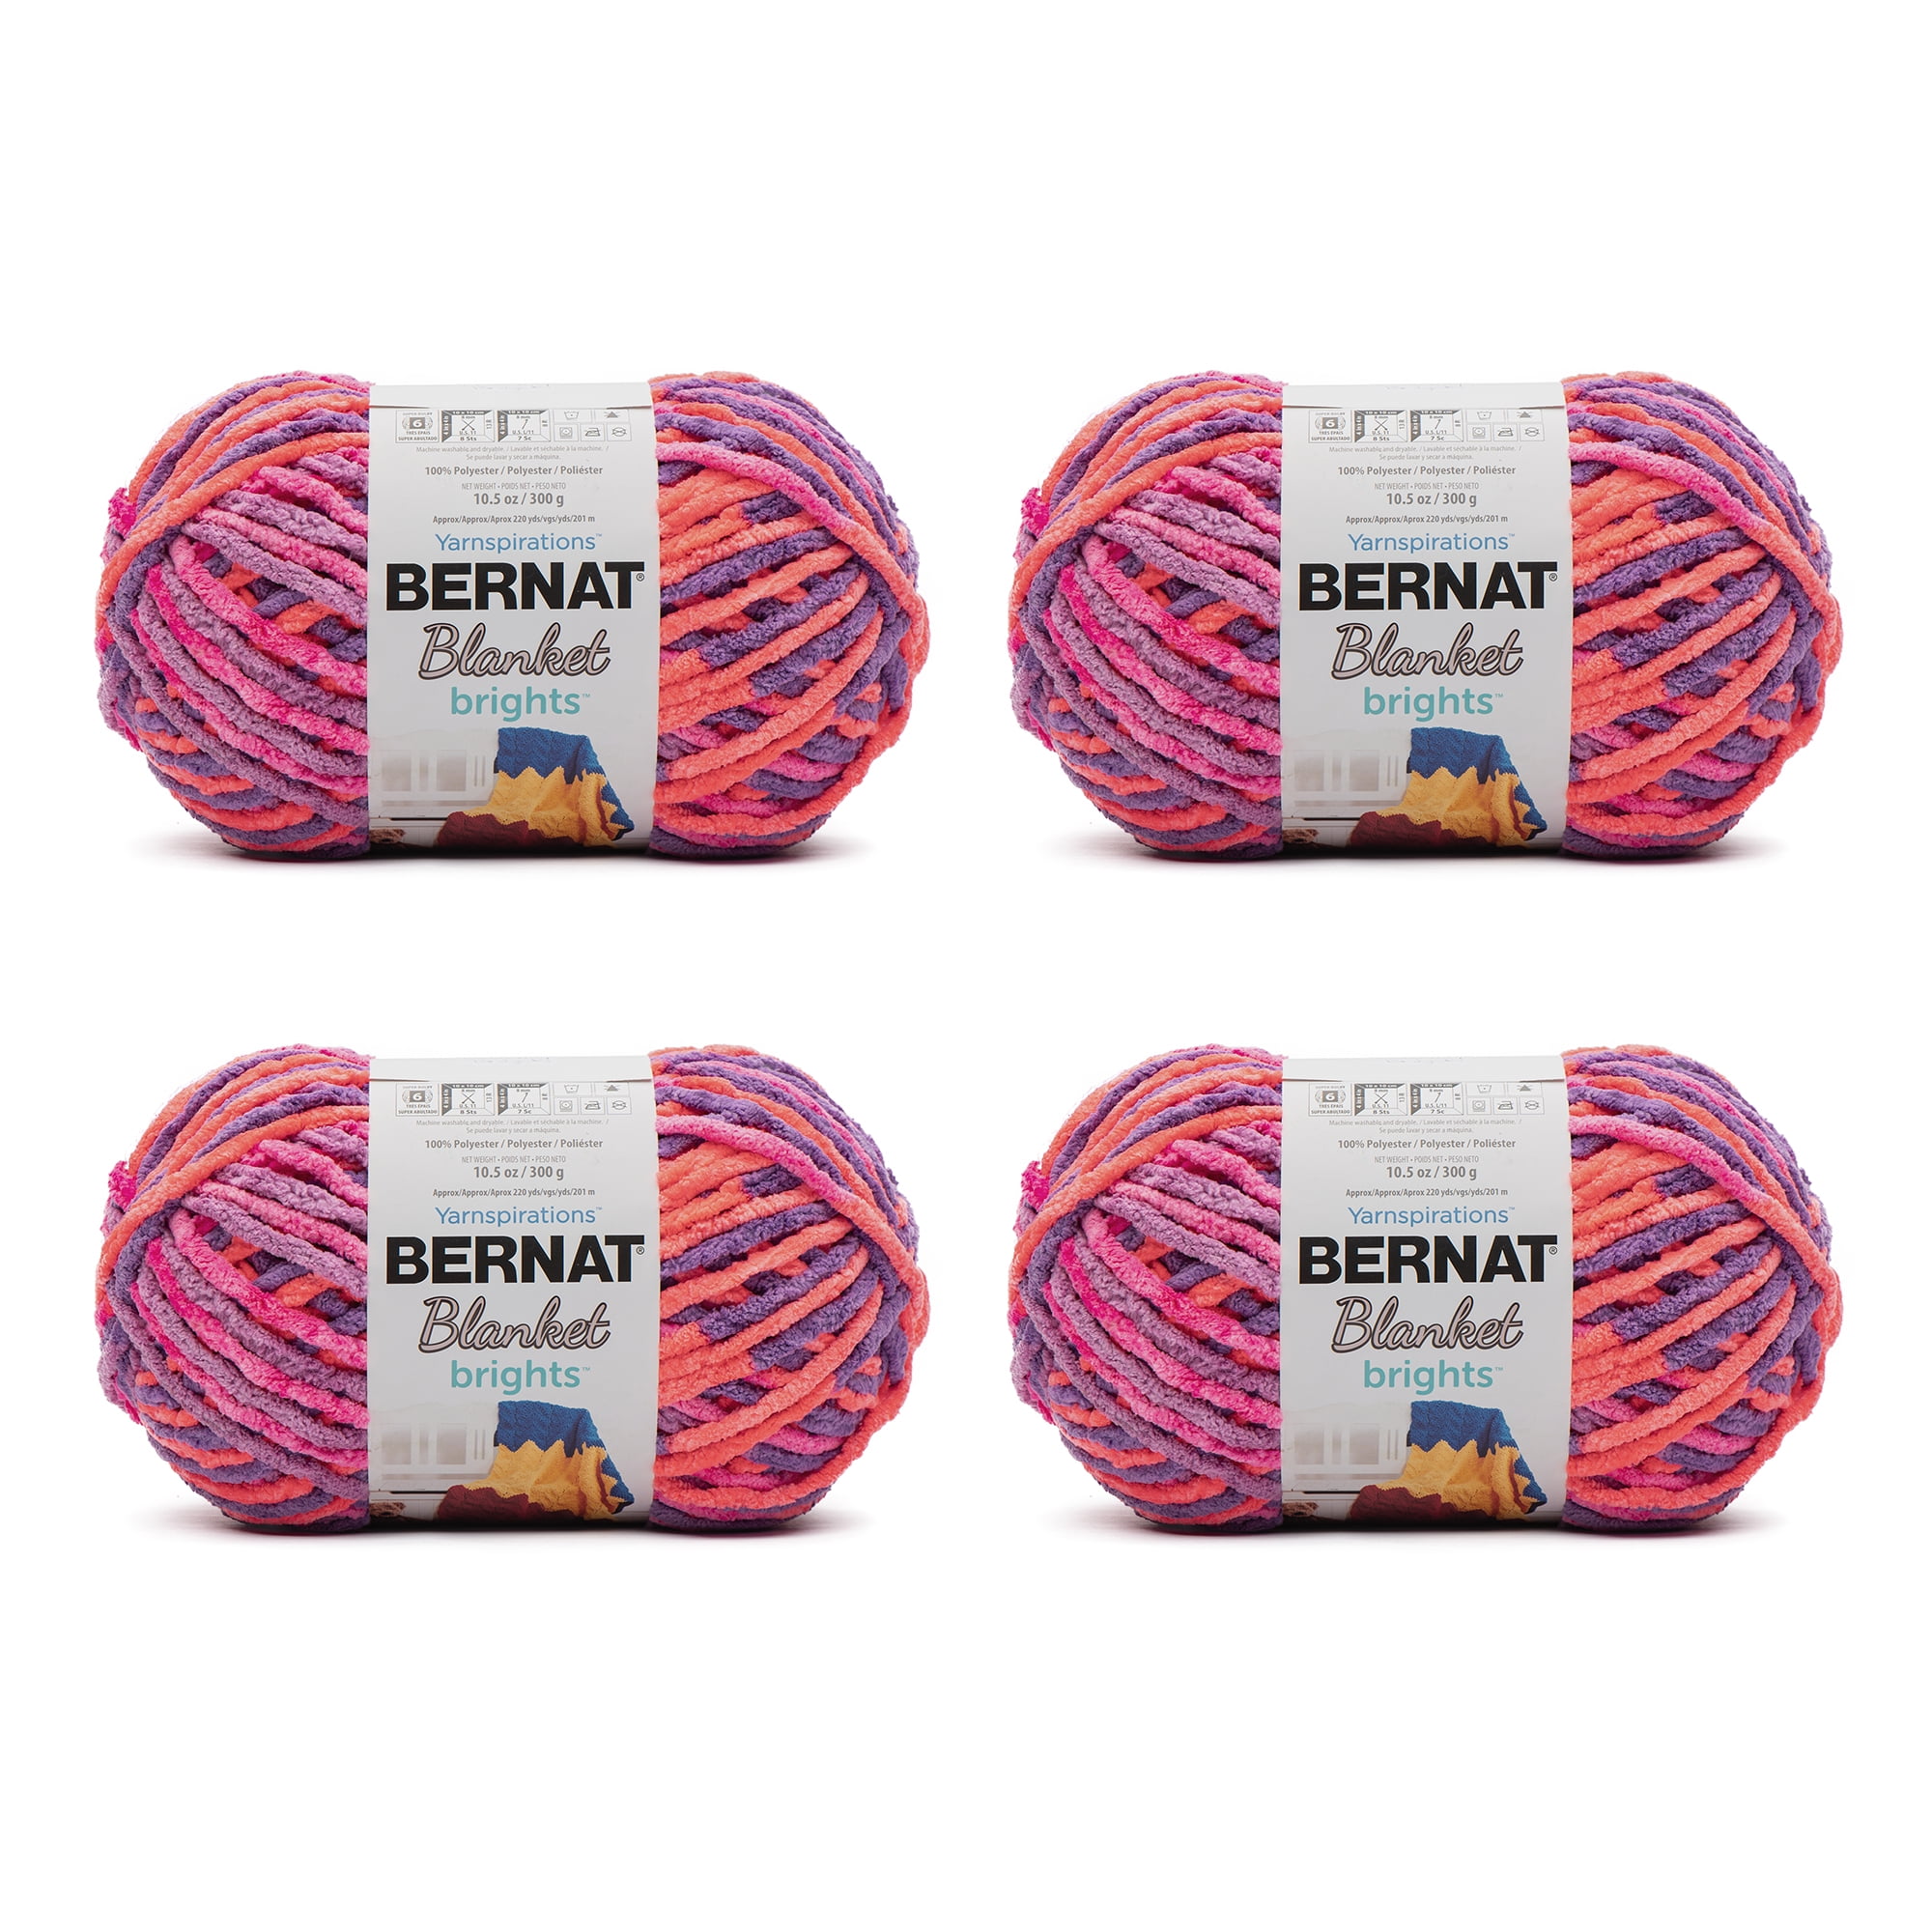 Bernat Blanket Brights Yarn 100% Polyester 220 Yds 10.5 Oz Super Bulky Pink  Dazzle Waterslide Varg 